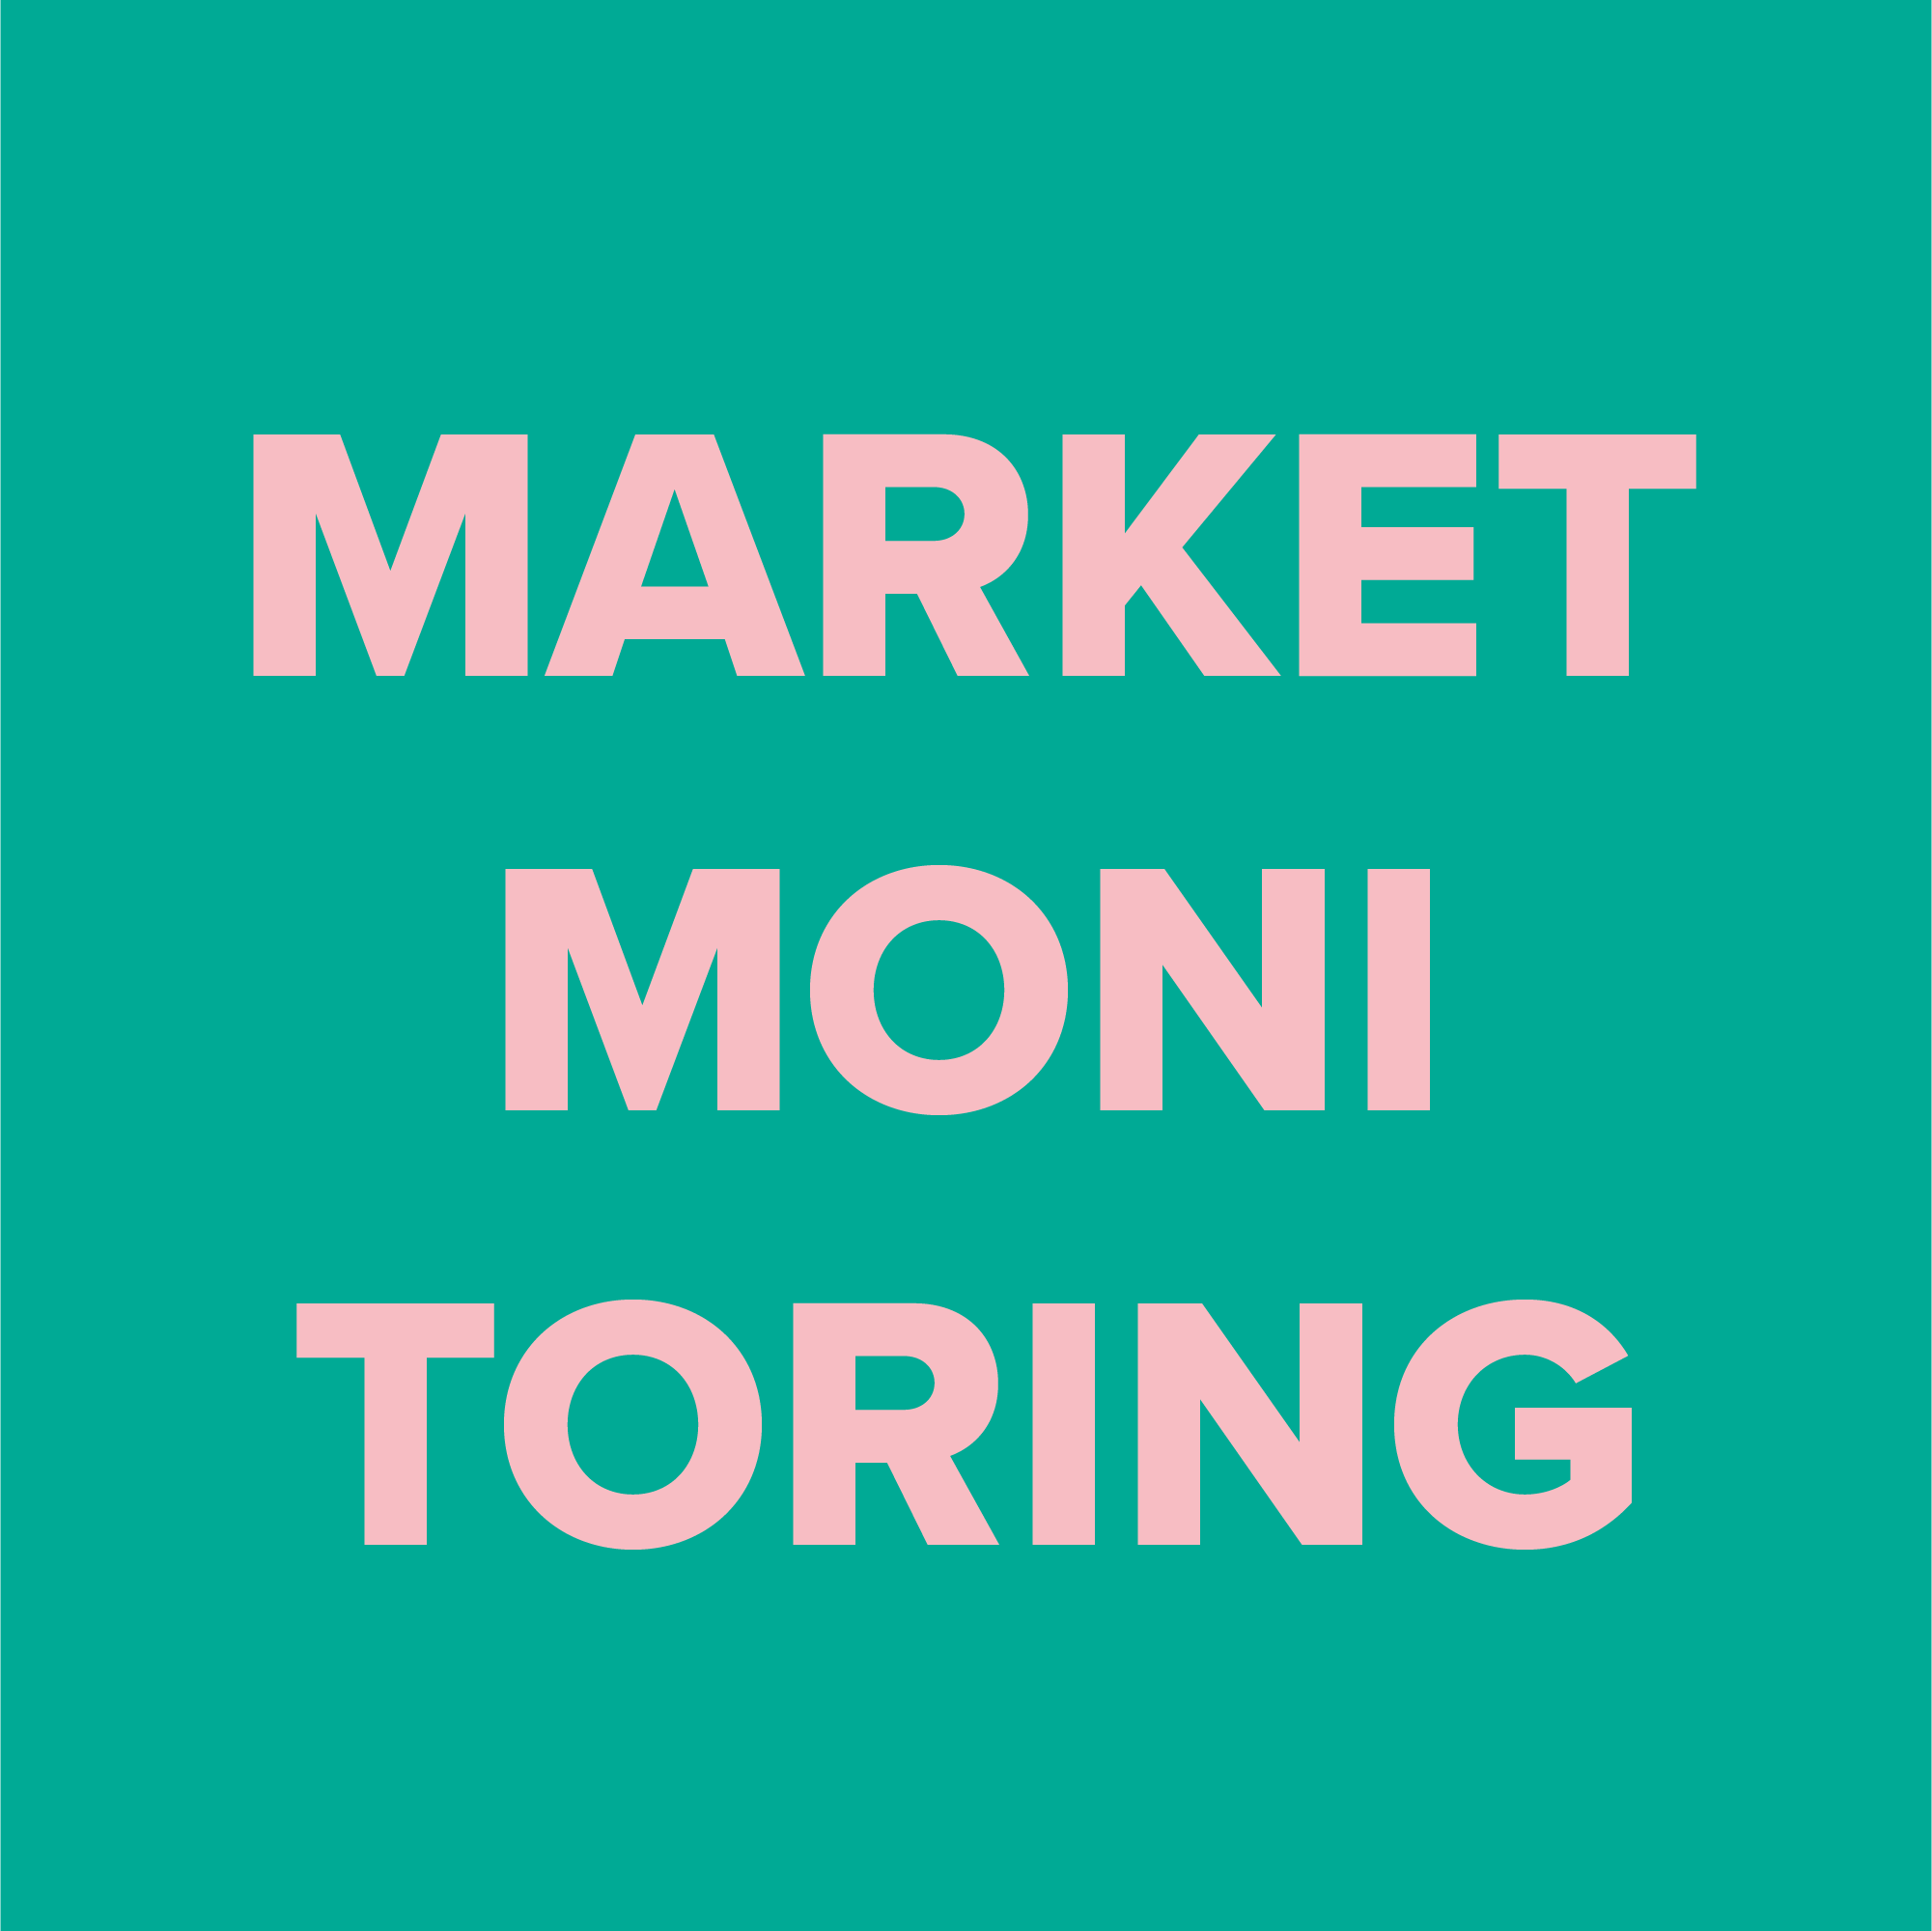 Dieses Bild enthält den Text "Market Monitoring" (Marktbeobachtung)..